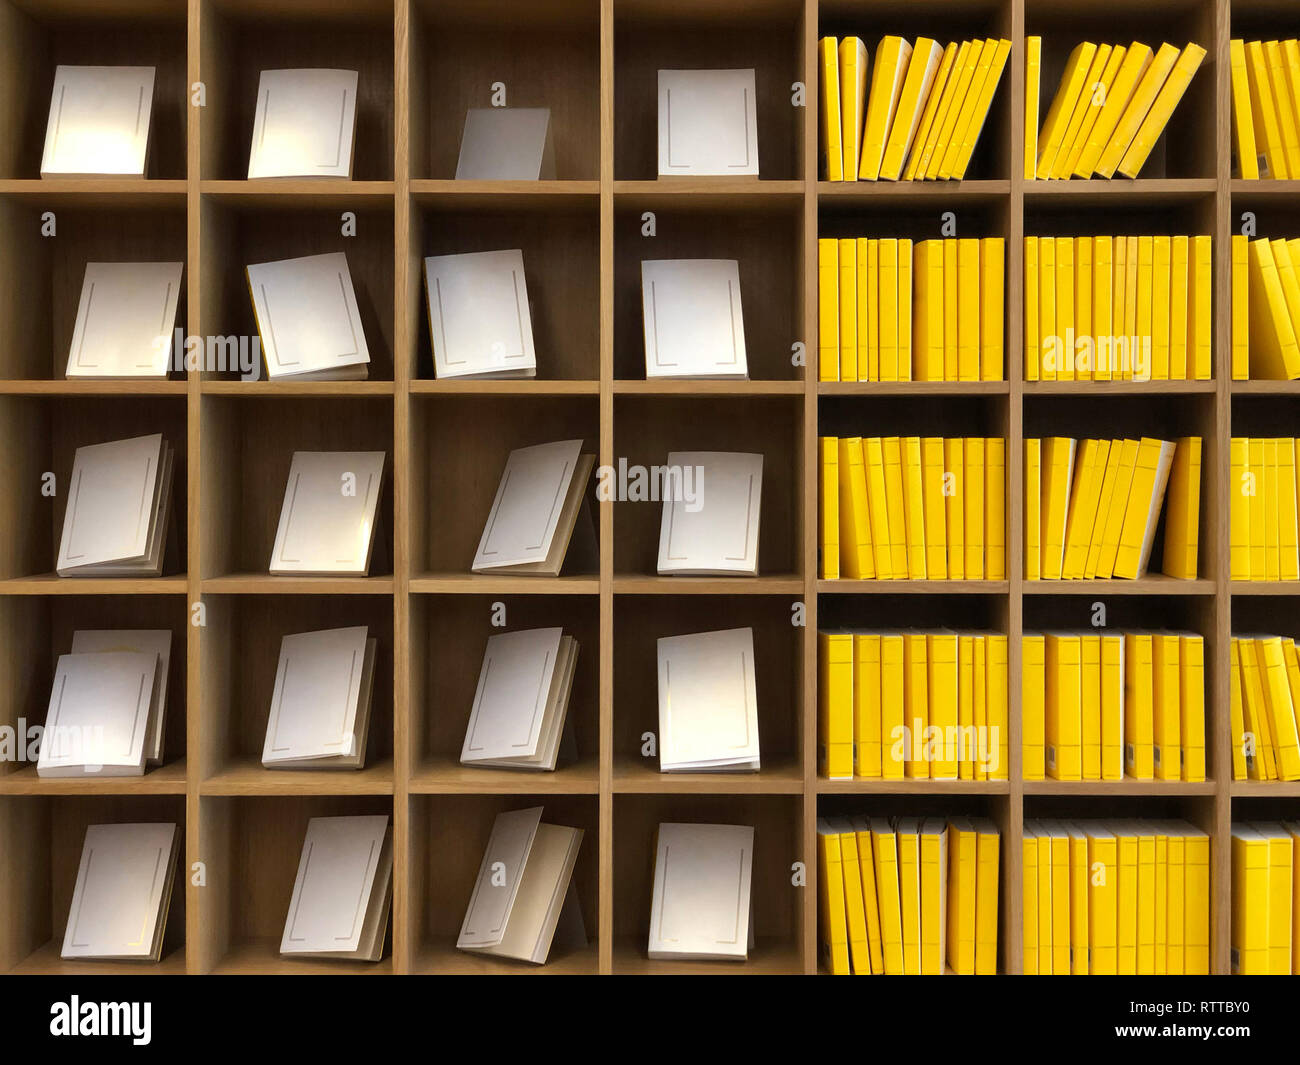 Makeup Of Regular Grid Of Bookshelf in Public Library Stock Photo